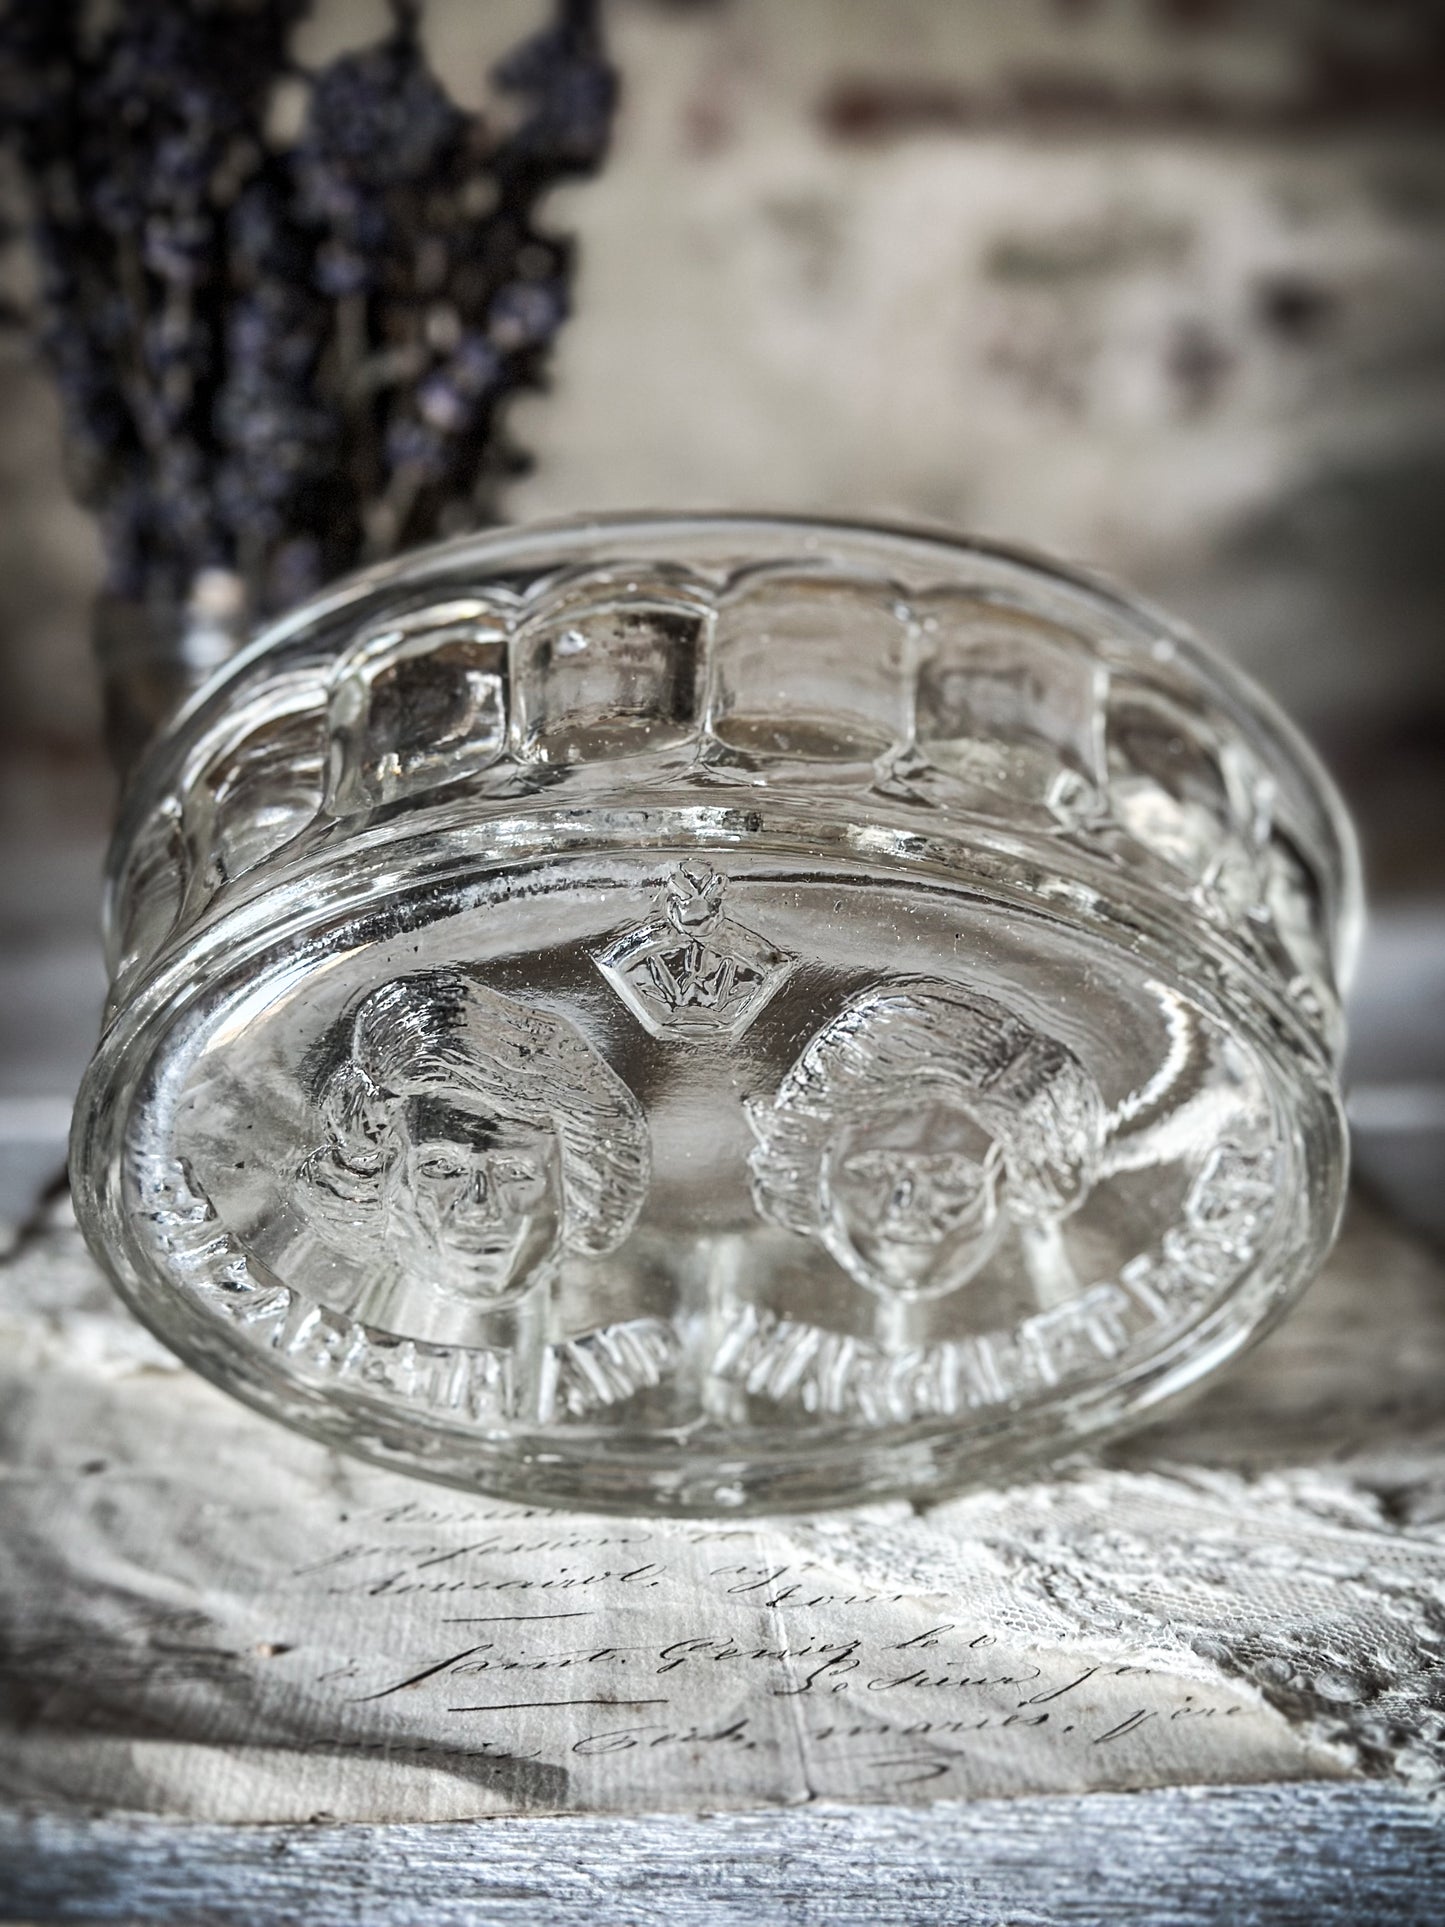 Elizabeth and Margaret Rose Royal memorabilia glass jelly mould -The Queen Elizabeth II